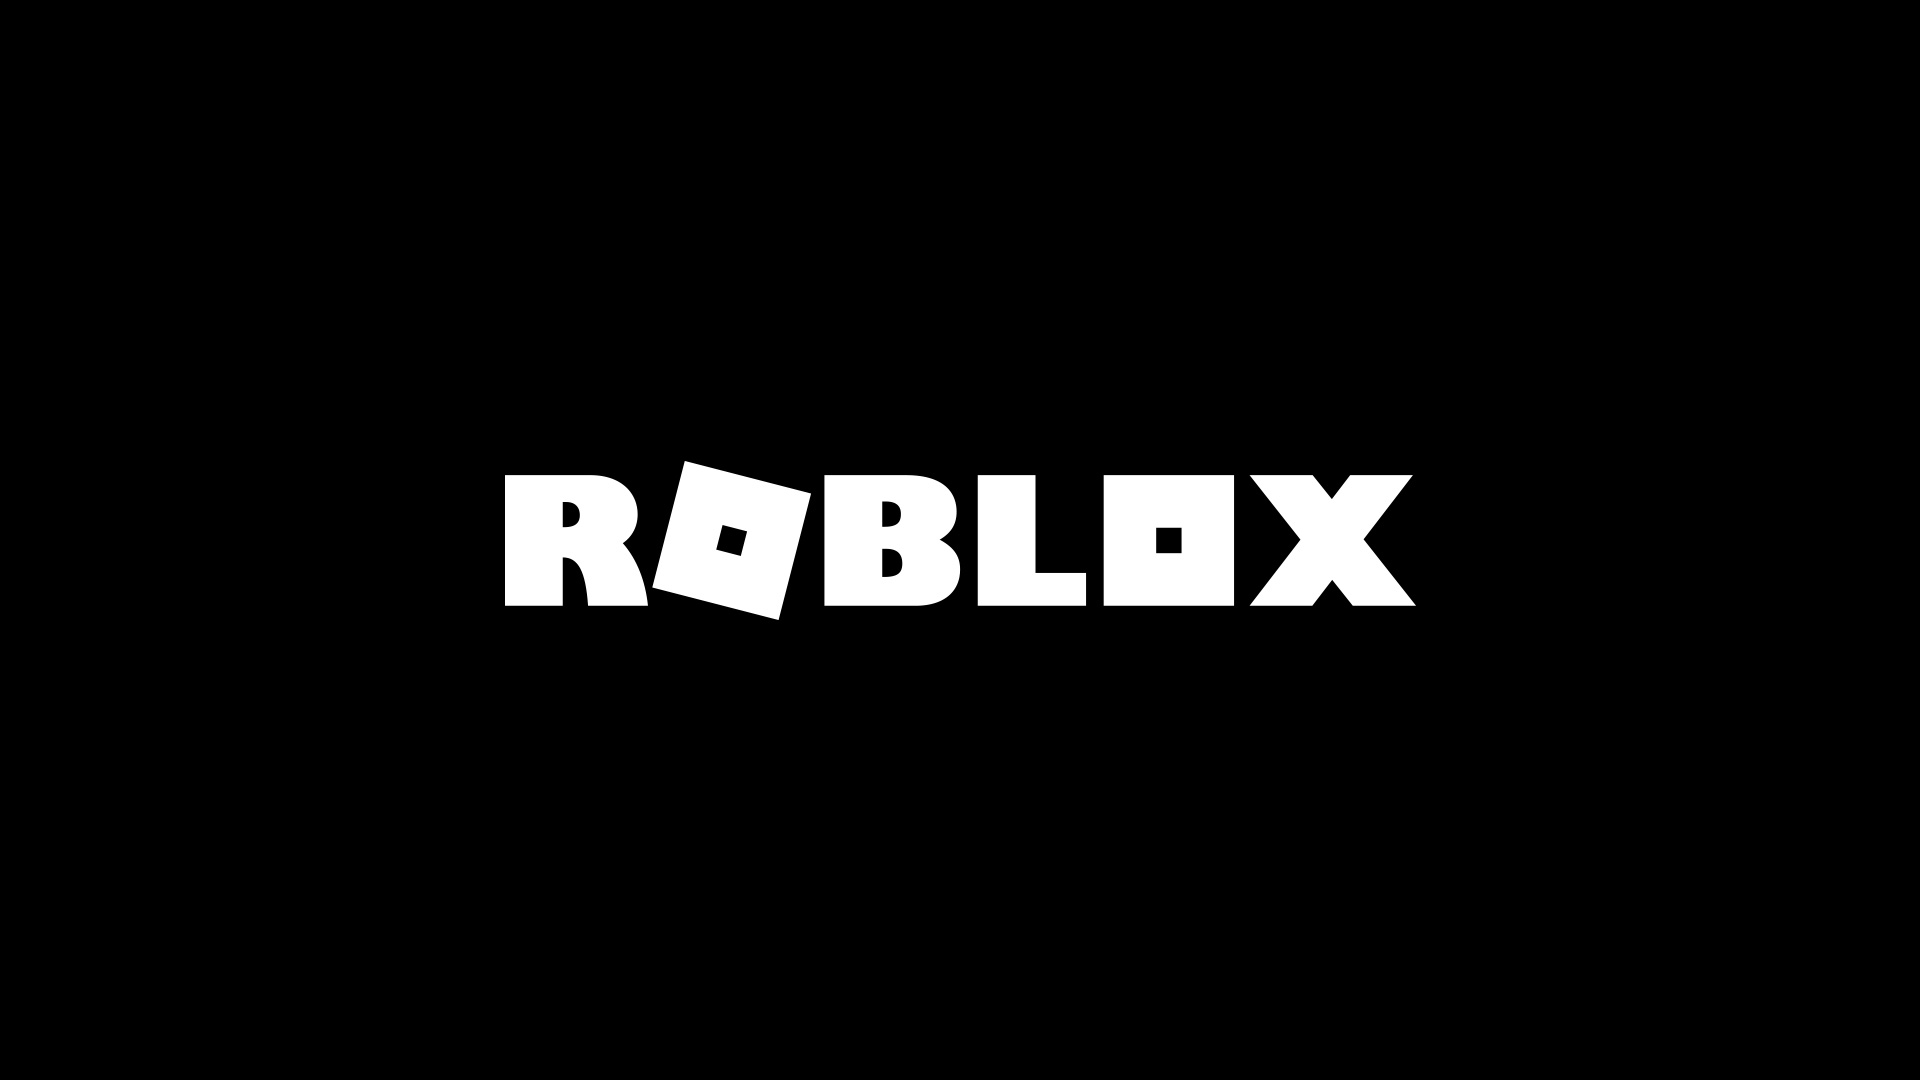 How To Make A Roblox Blog Site